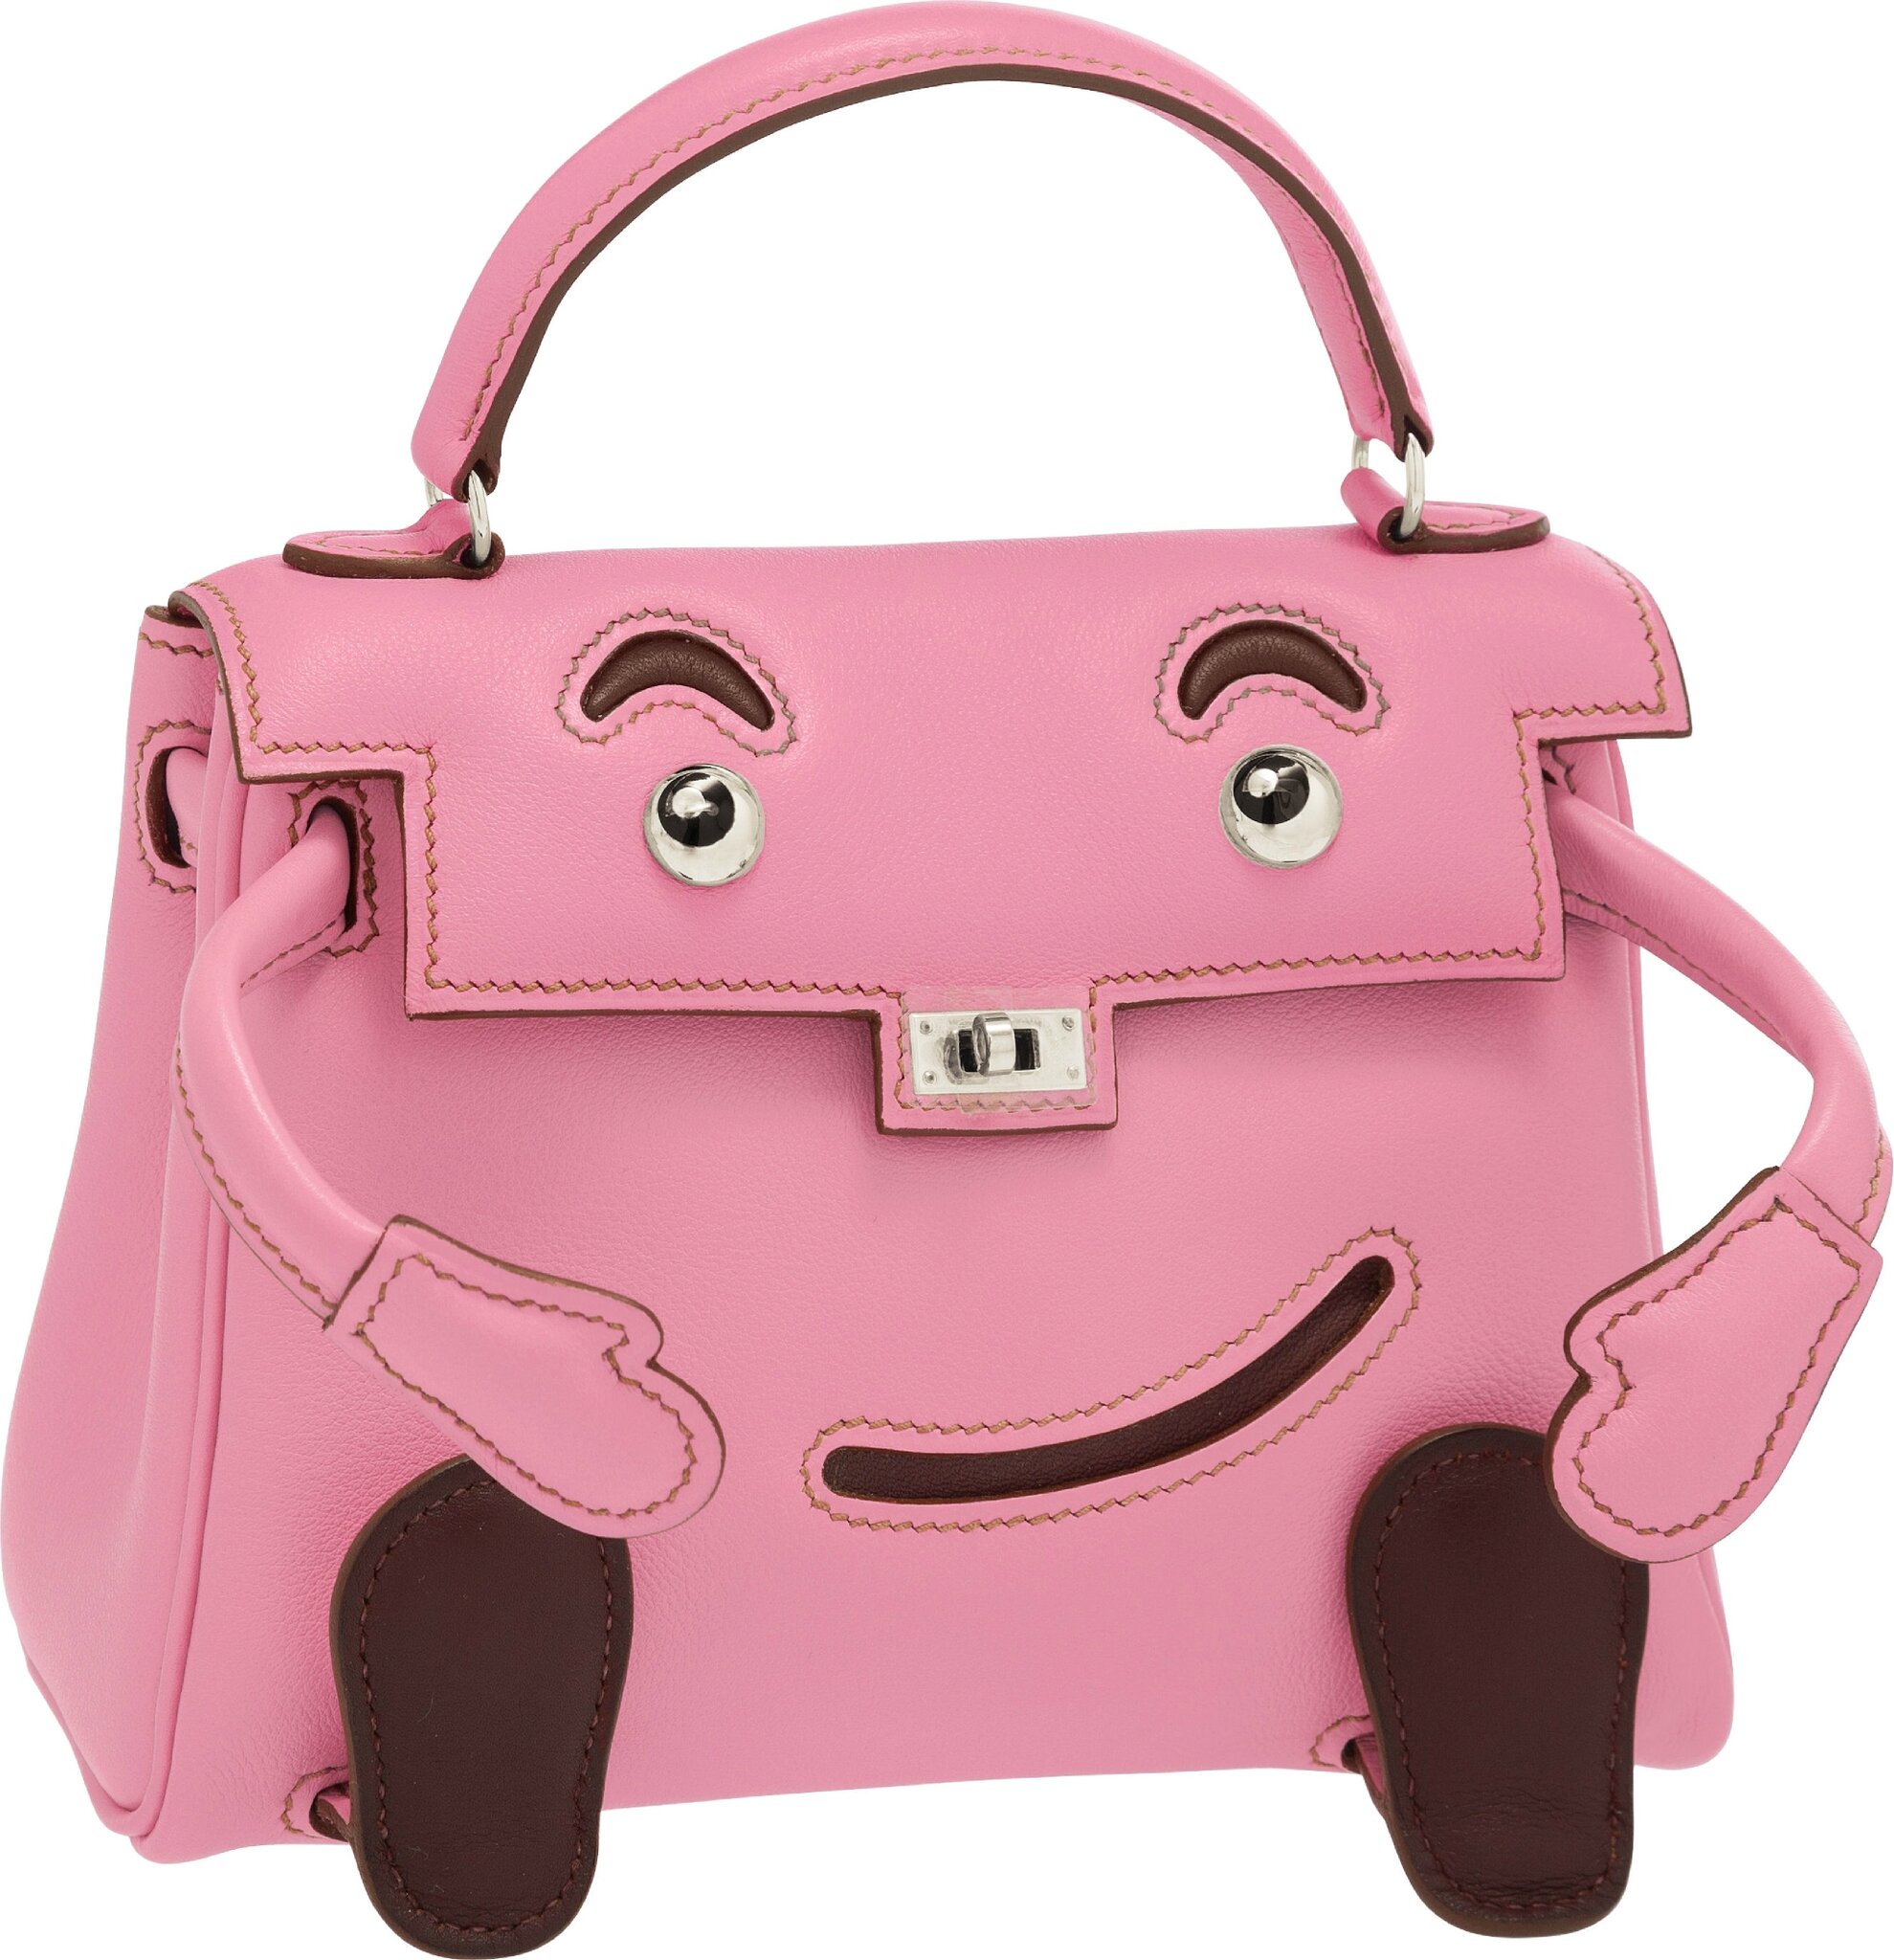 Sold at Auction: Hermes Birkin 35 Bag in 5P Bubblegum Pink Matte